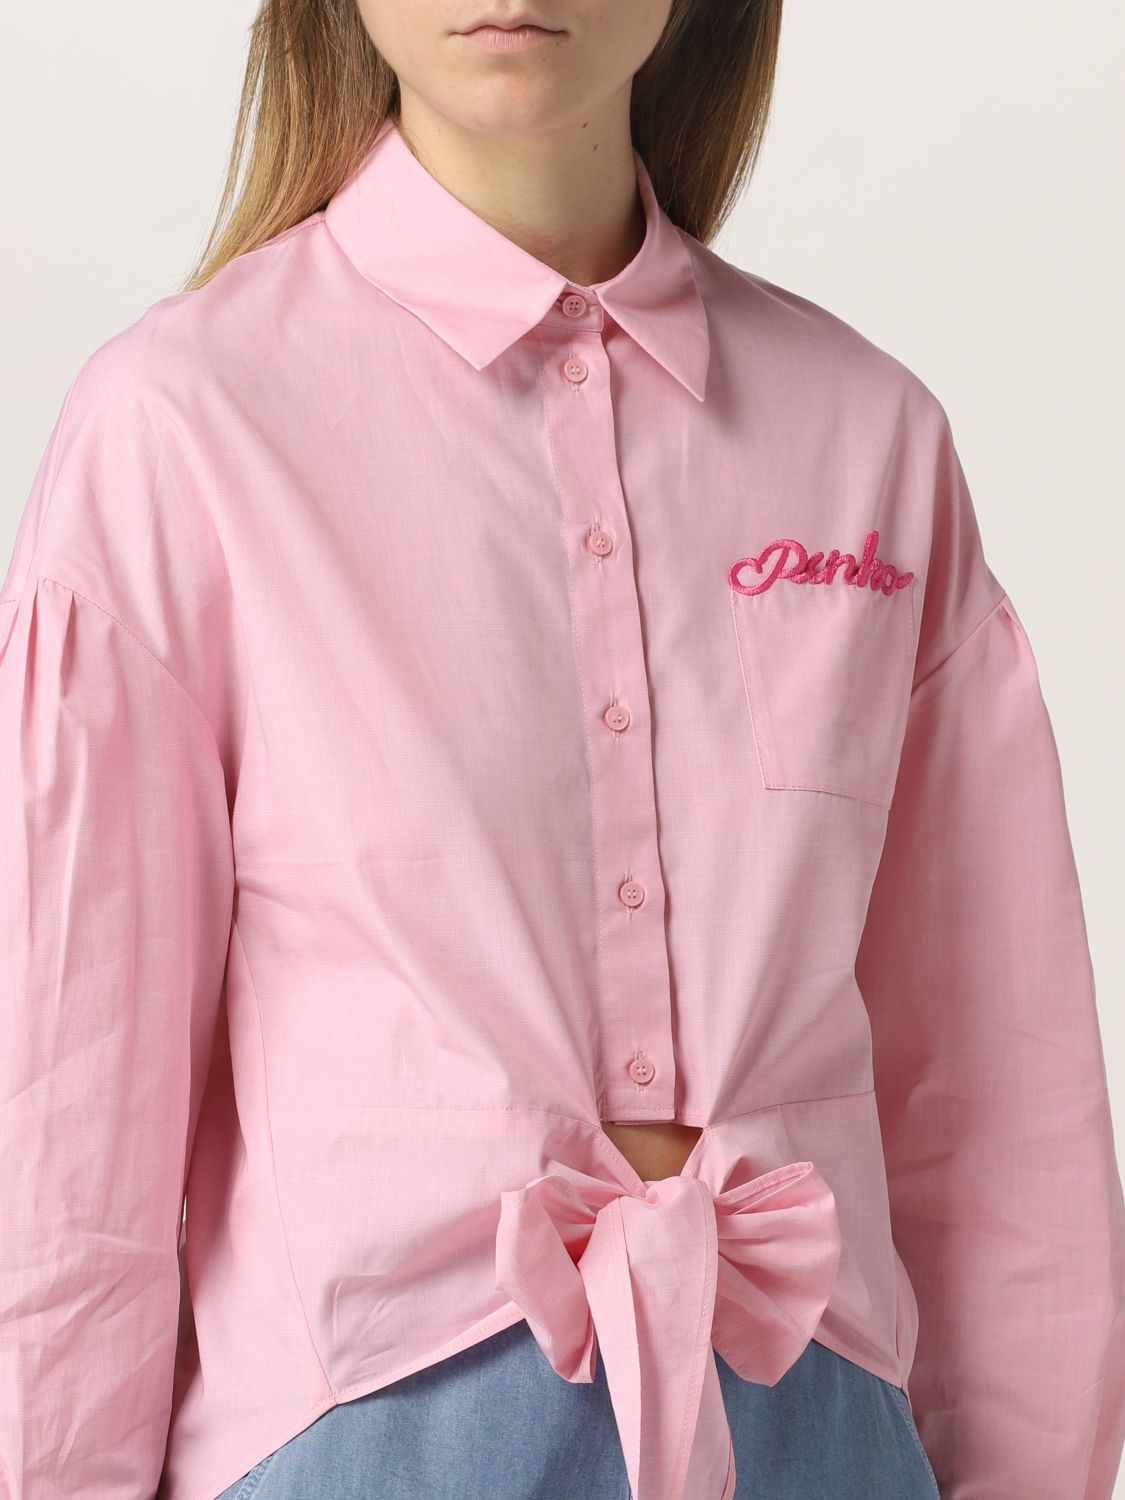 Pinko cotton shirt with logo